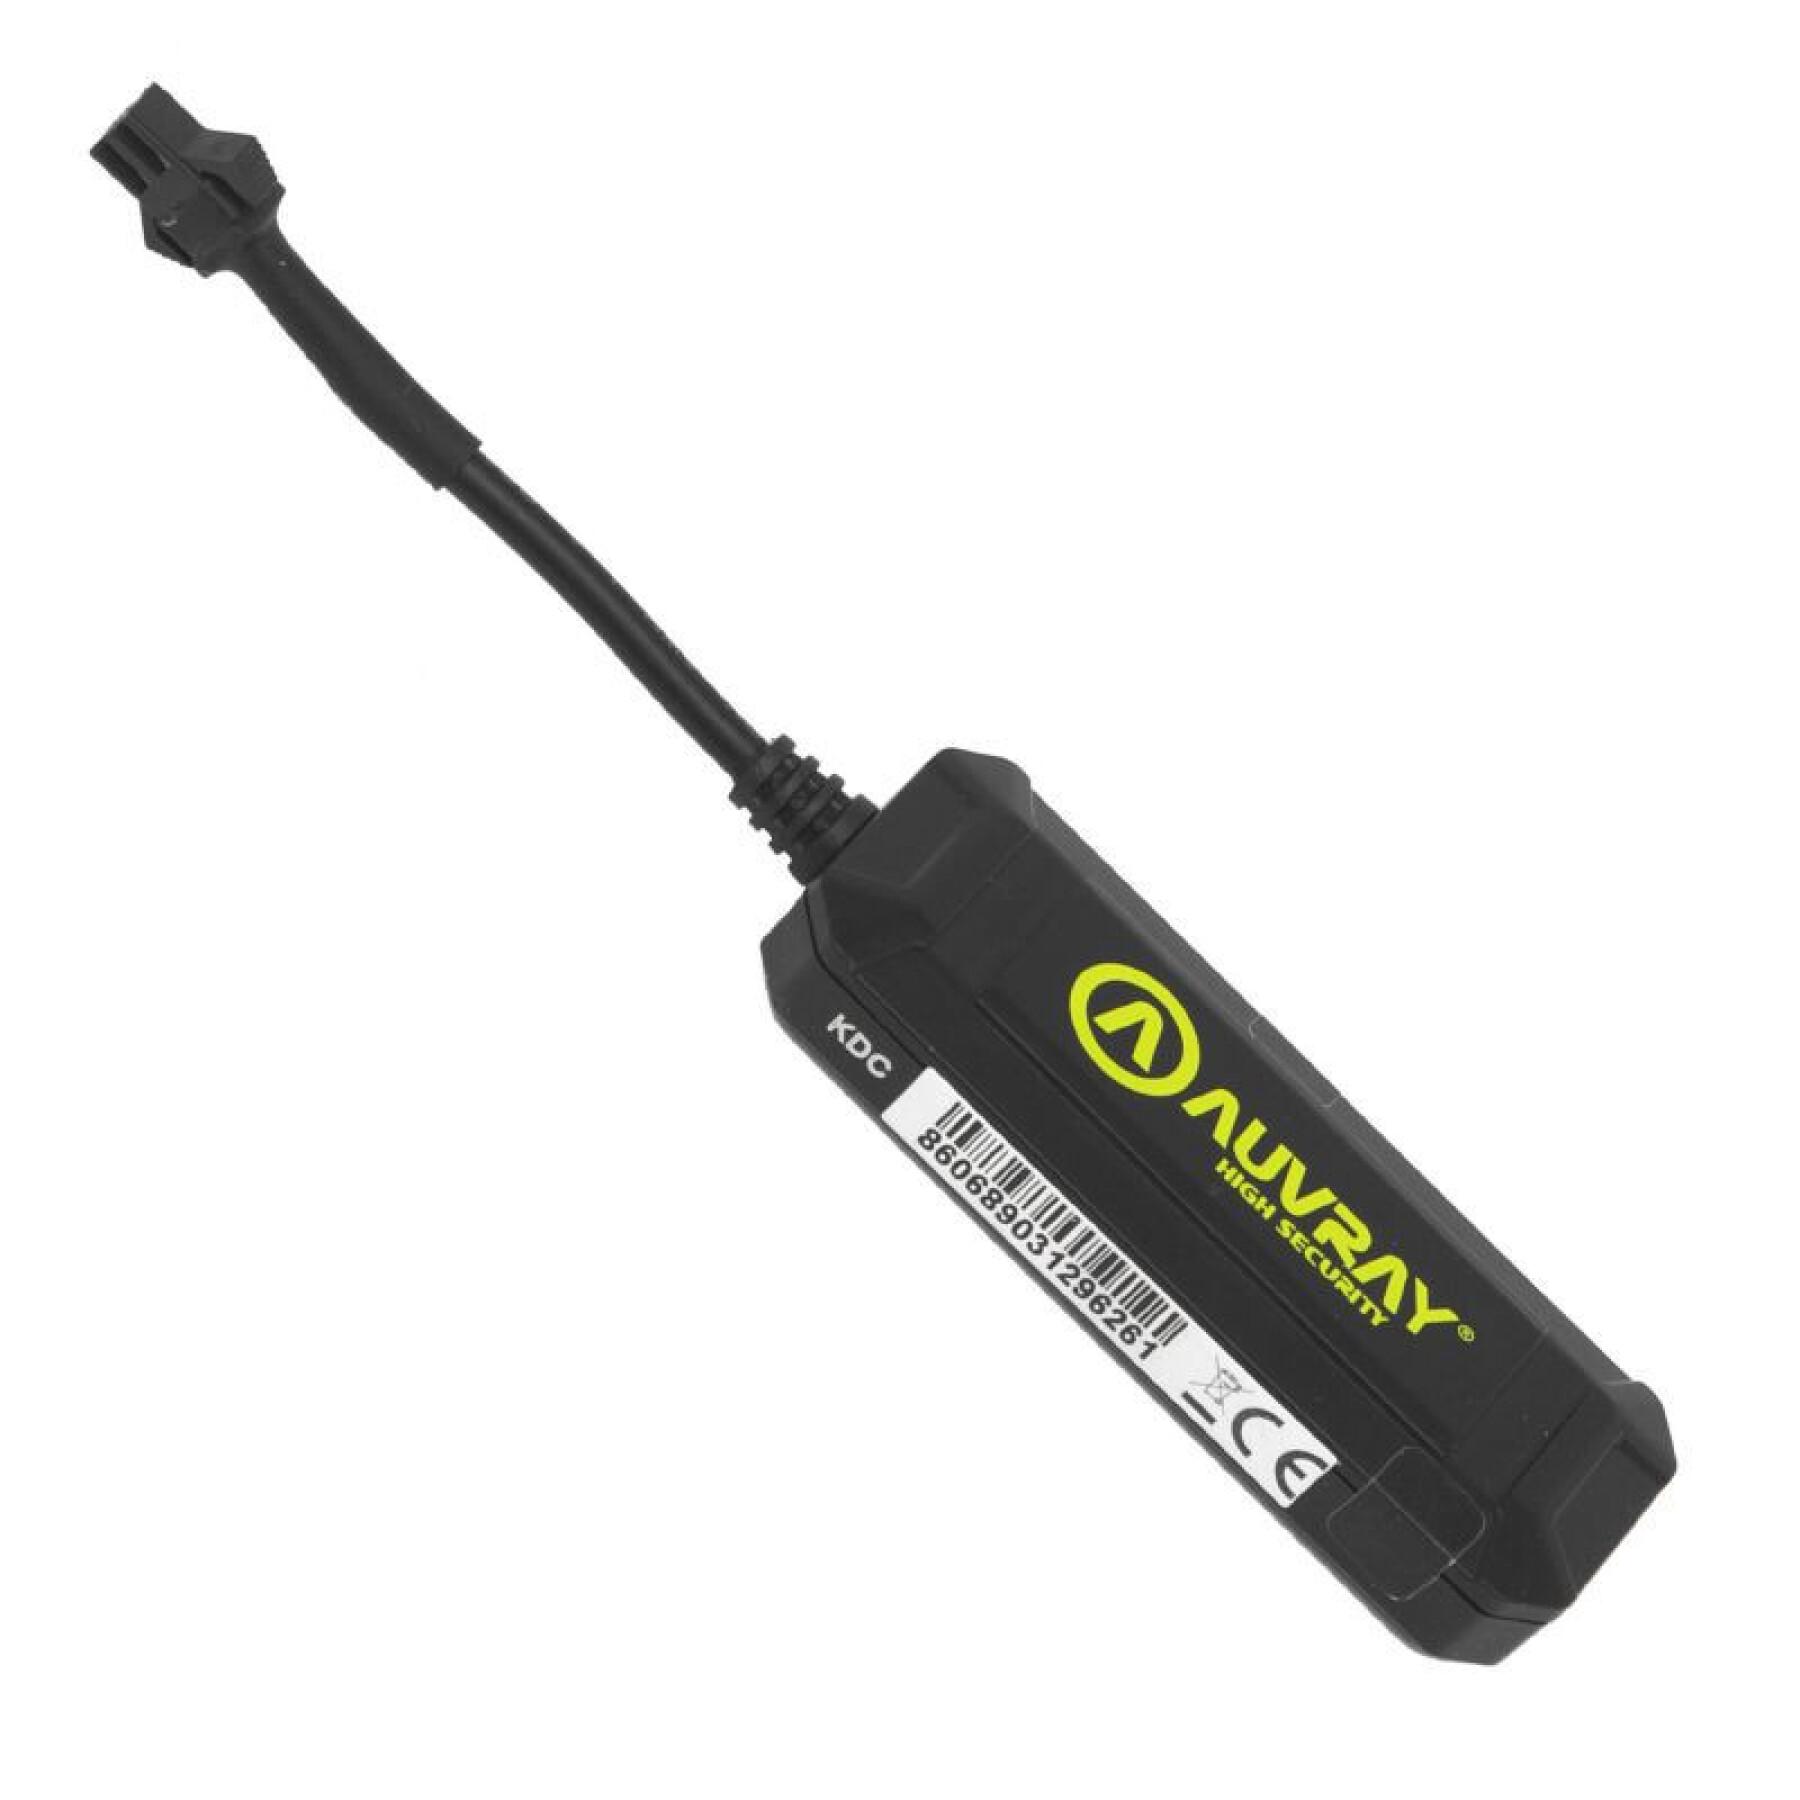 Tracker gps dispositivo de seguridad universal para coche-motocicleta-scooter-coche Auvray Gobox